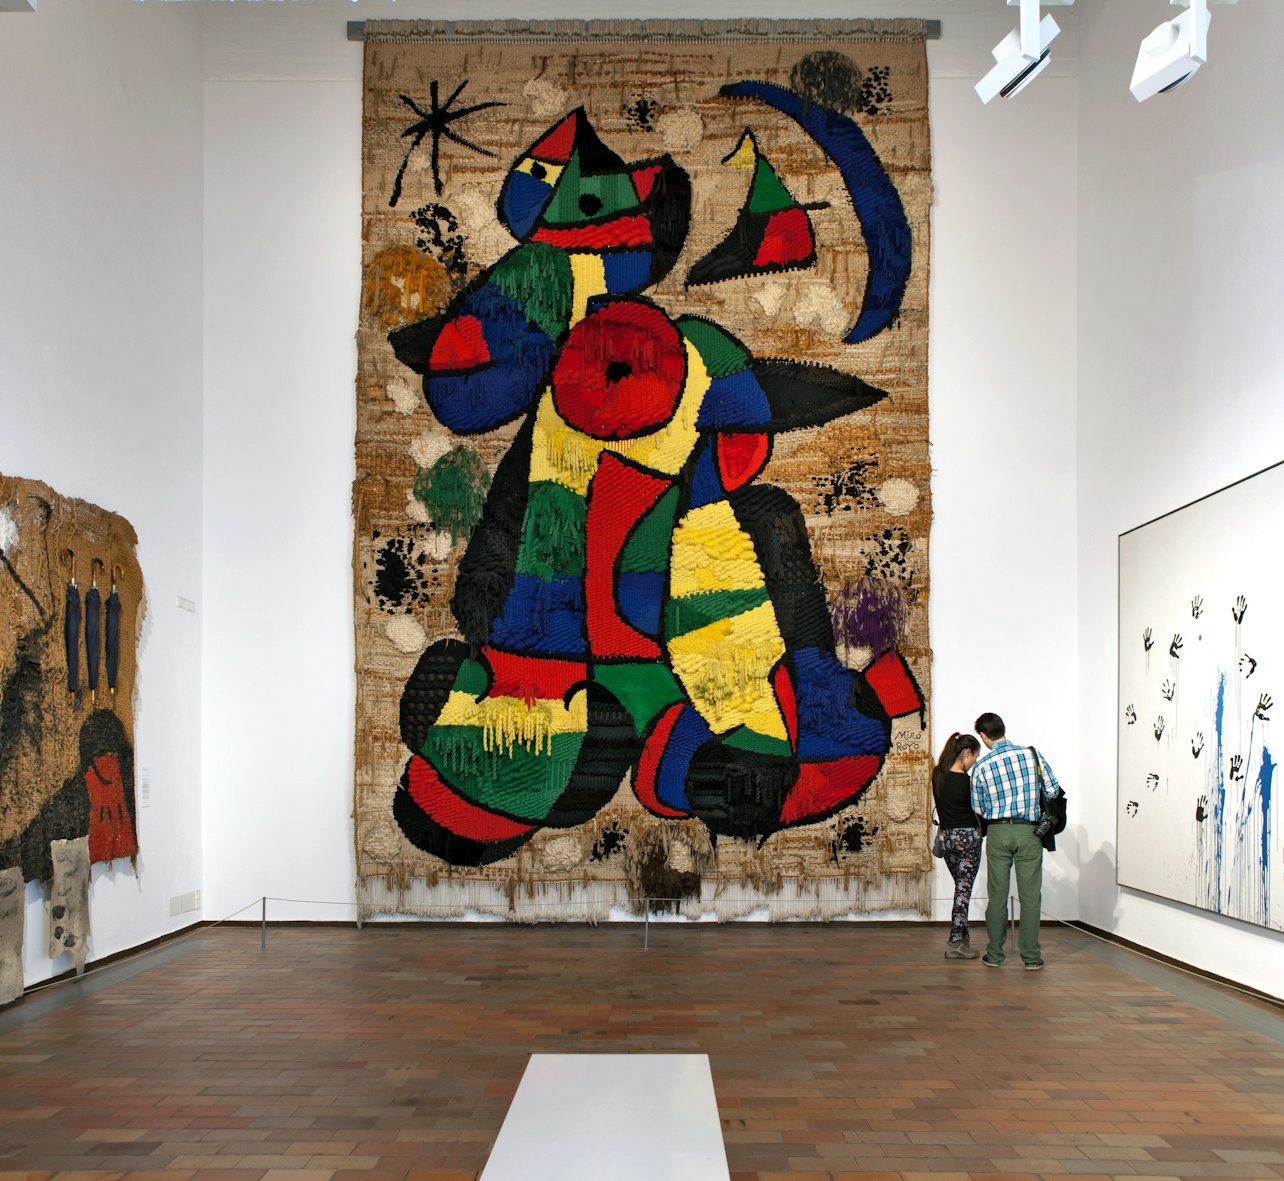 Fundació Joan Miró: Skip The Line - Accommodations in Barcelona